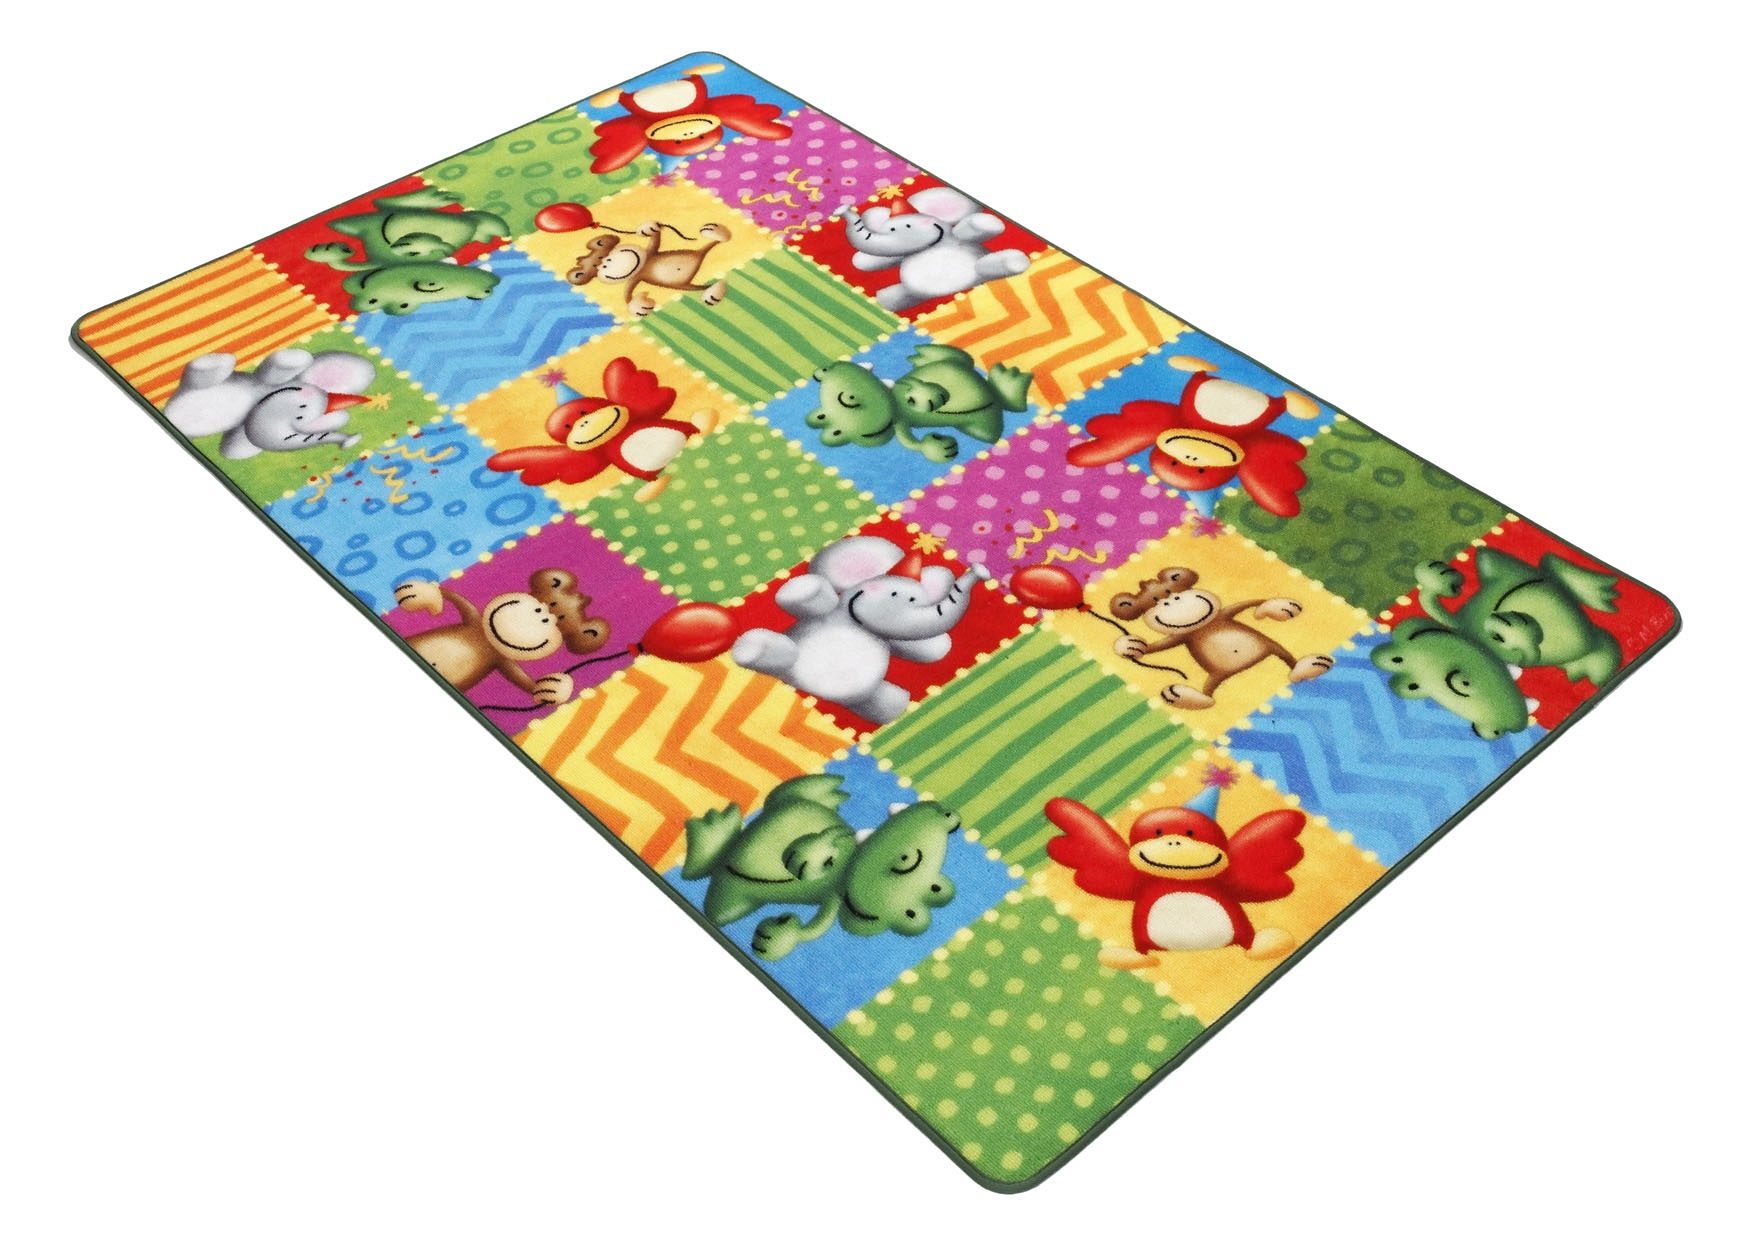 Böing Carpet Mat Lovely Kids LK-5 Inloopmat, vloerkleed in printdessin, motief dierentuindieren, kinderkamer